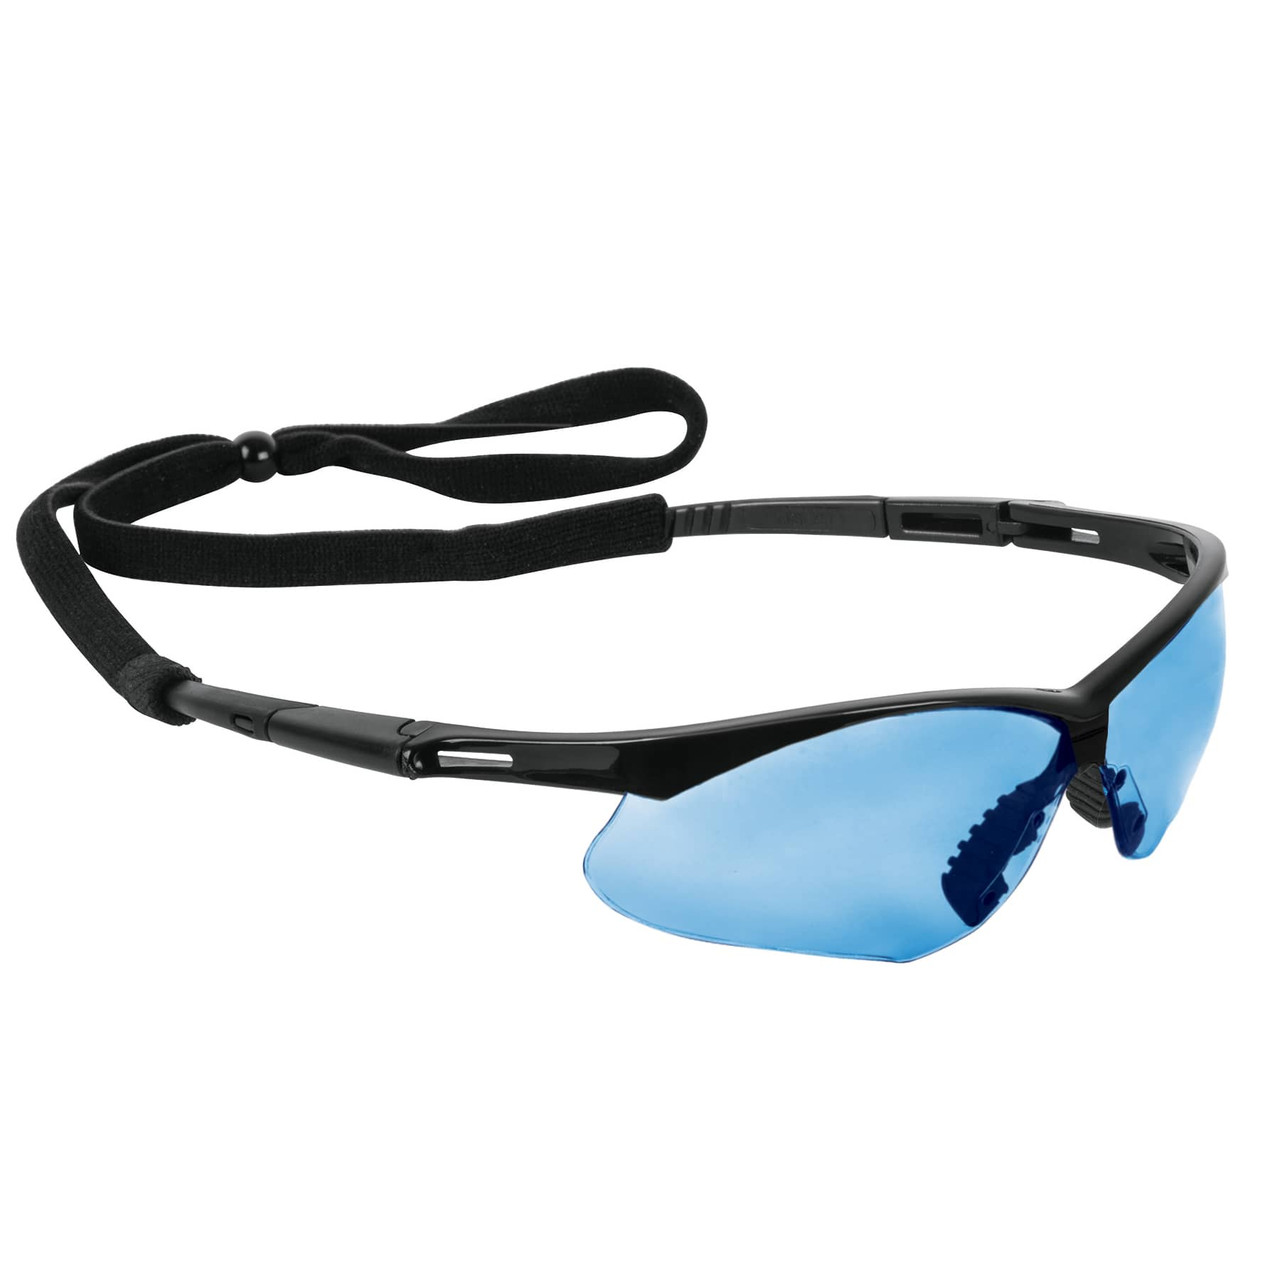 Truper Sport Eyewear Blue Anti-fog Lens W/strap-2 Pack #15176